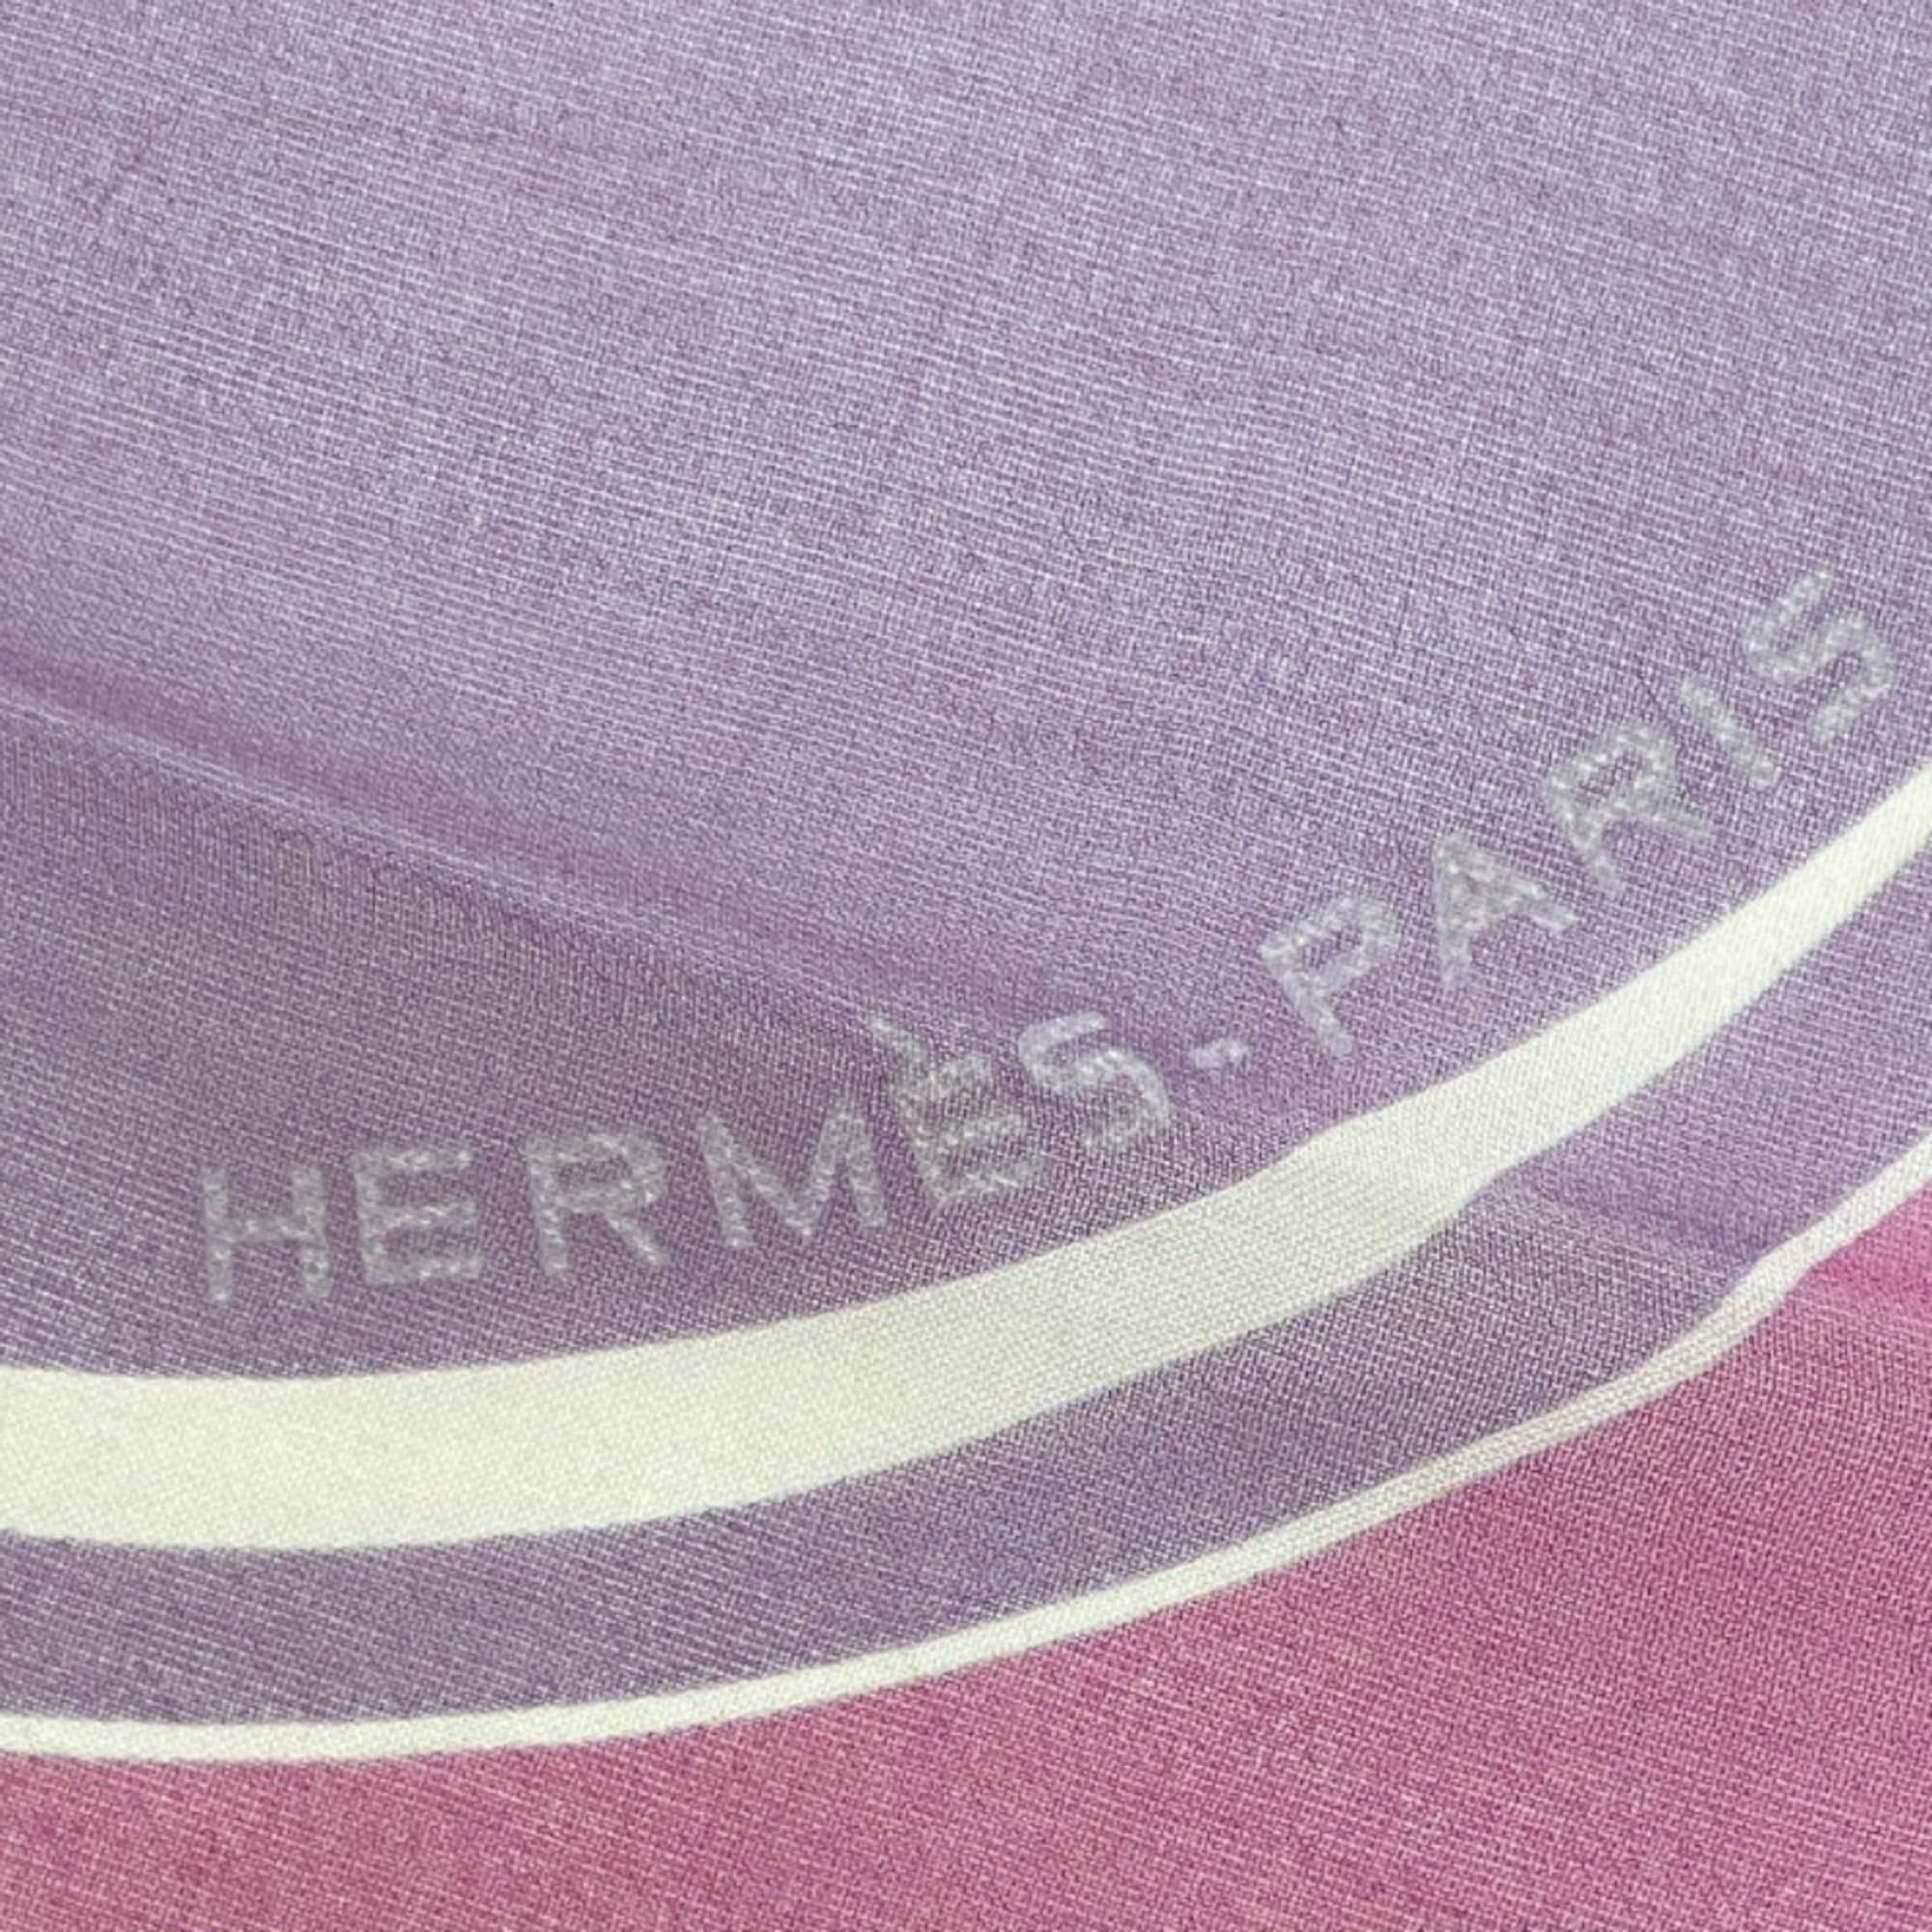 HERMES Carre 90 bal de bulles soap bubble muffler/scarf purple ladies Z0005197